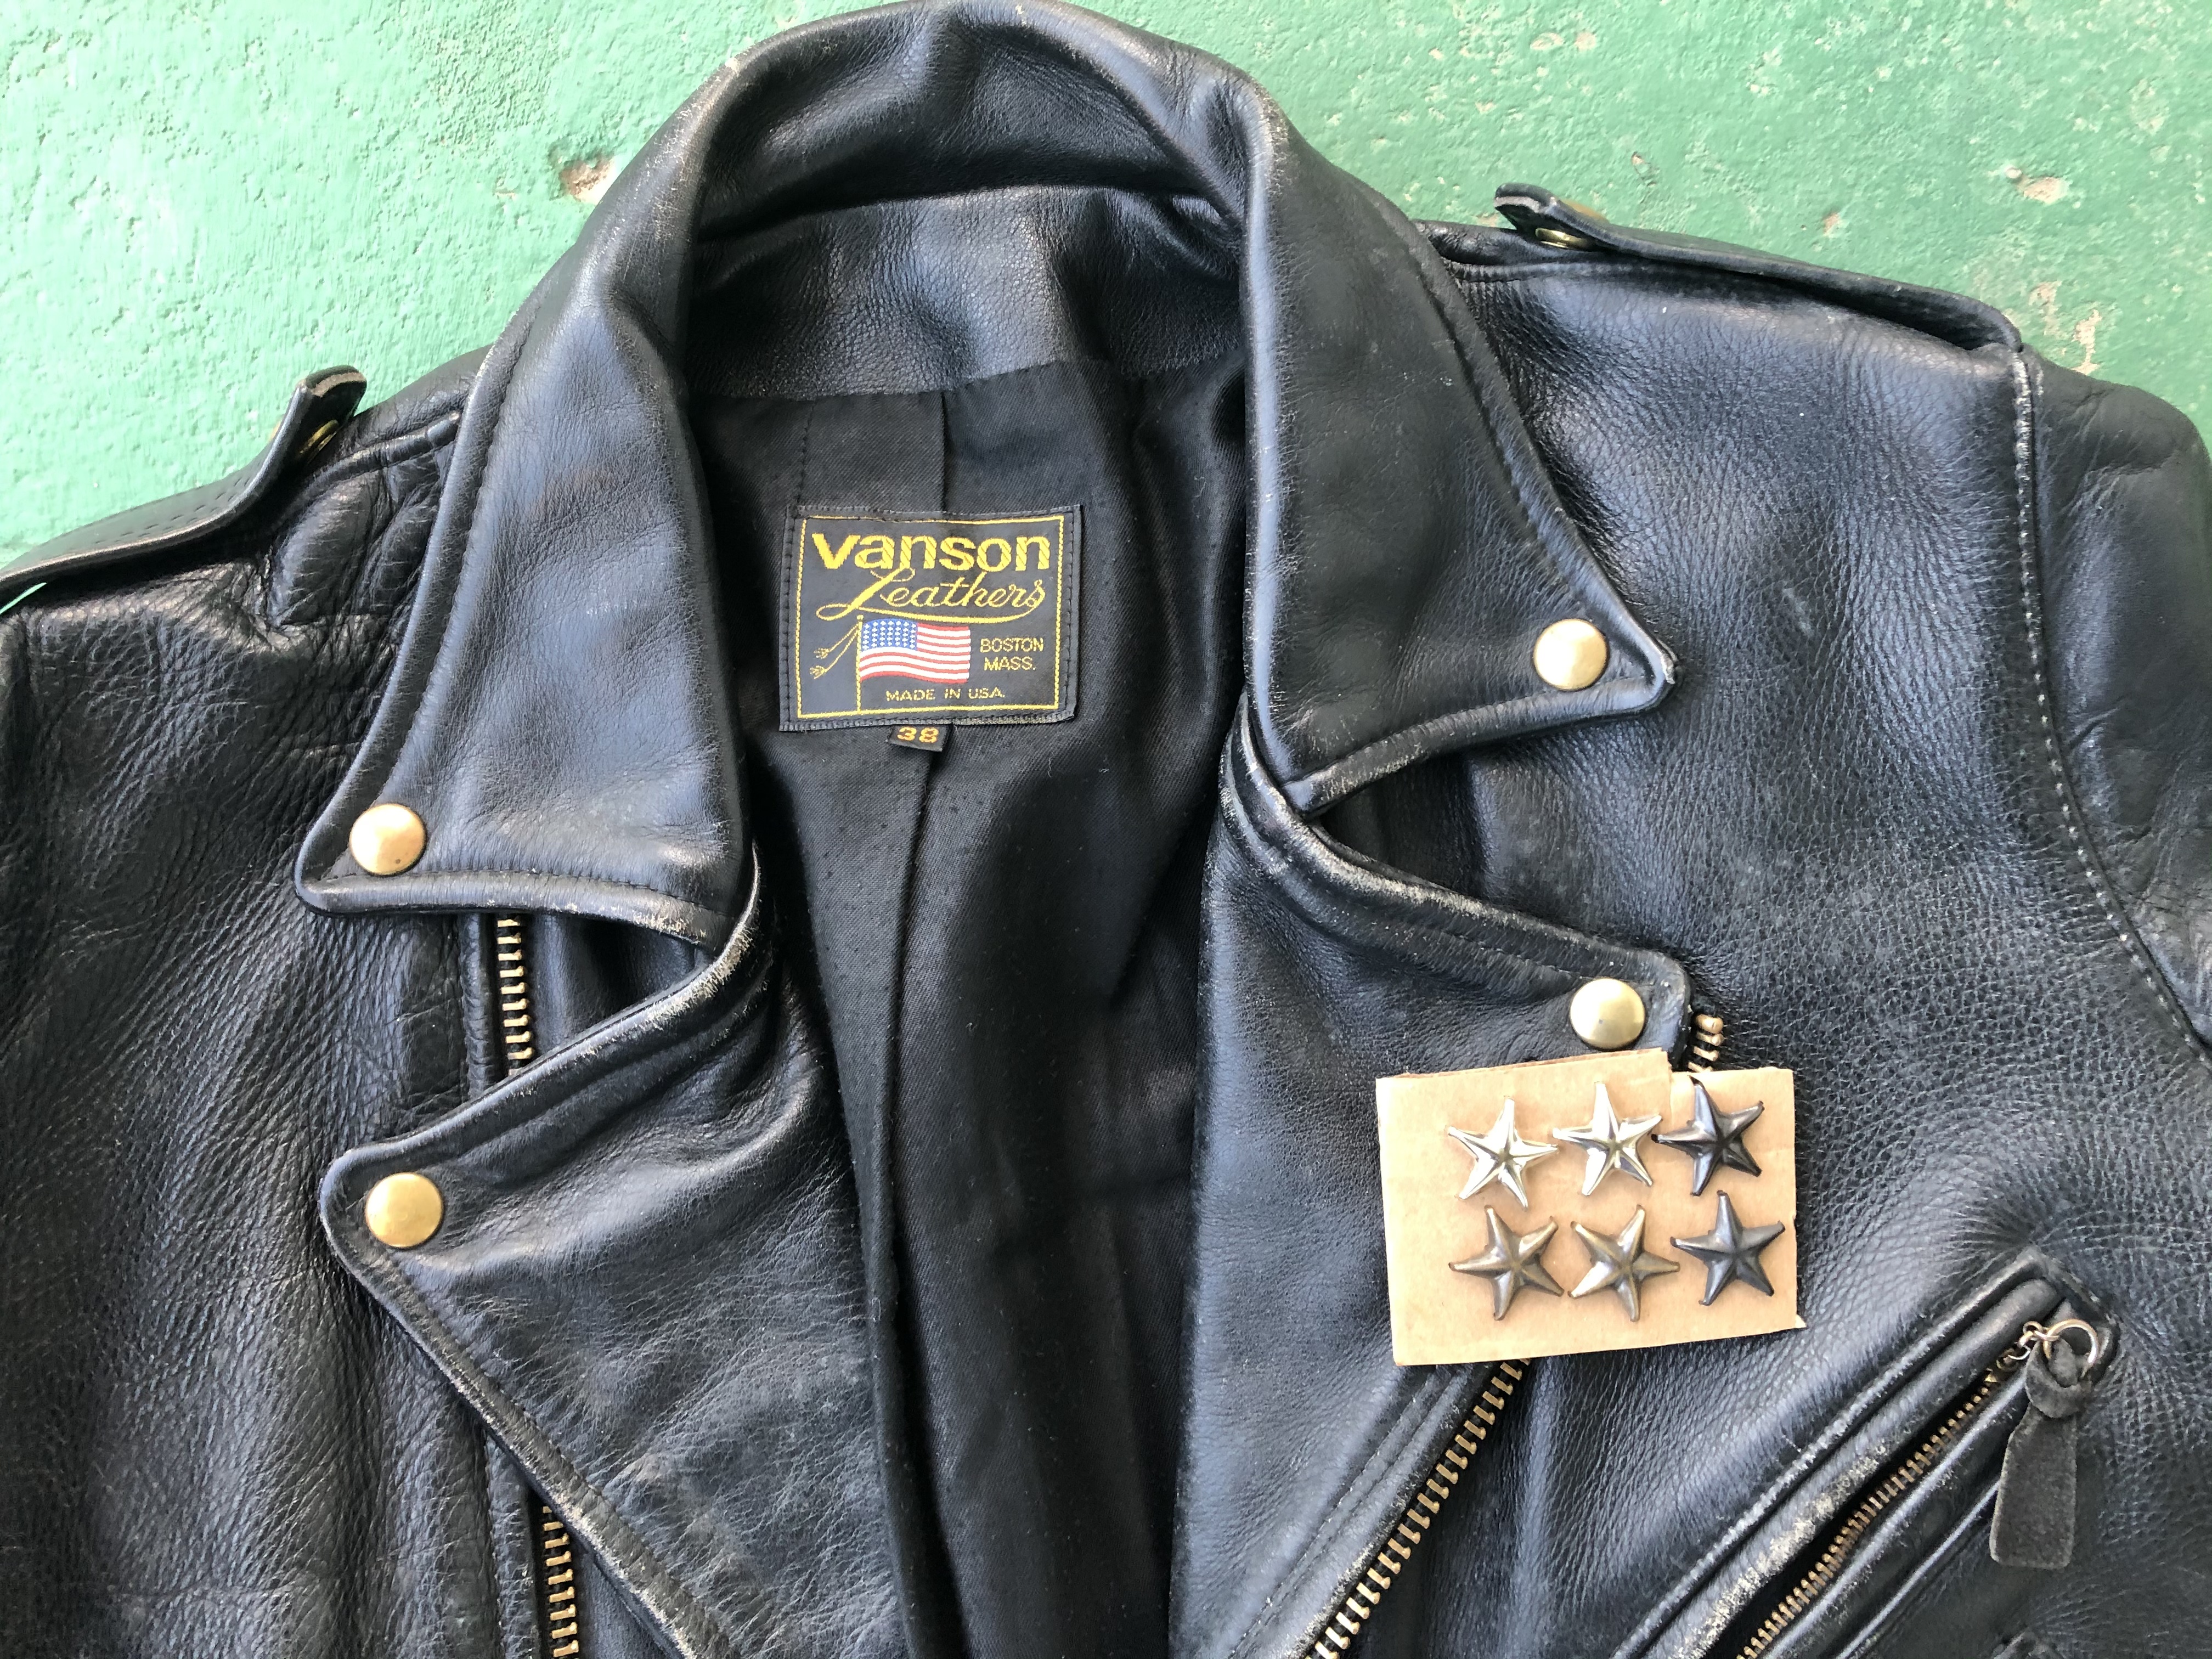 Schott Nyc Leather Jacket - RockStar Jacket